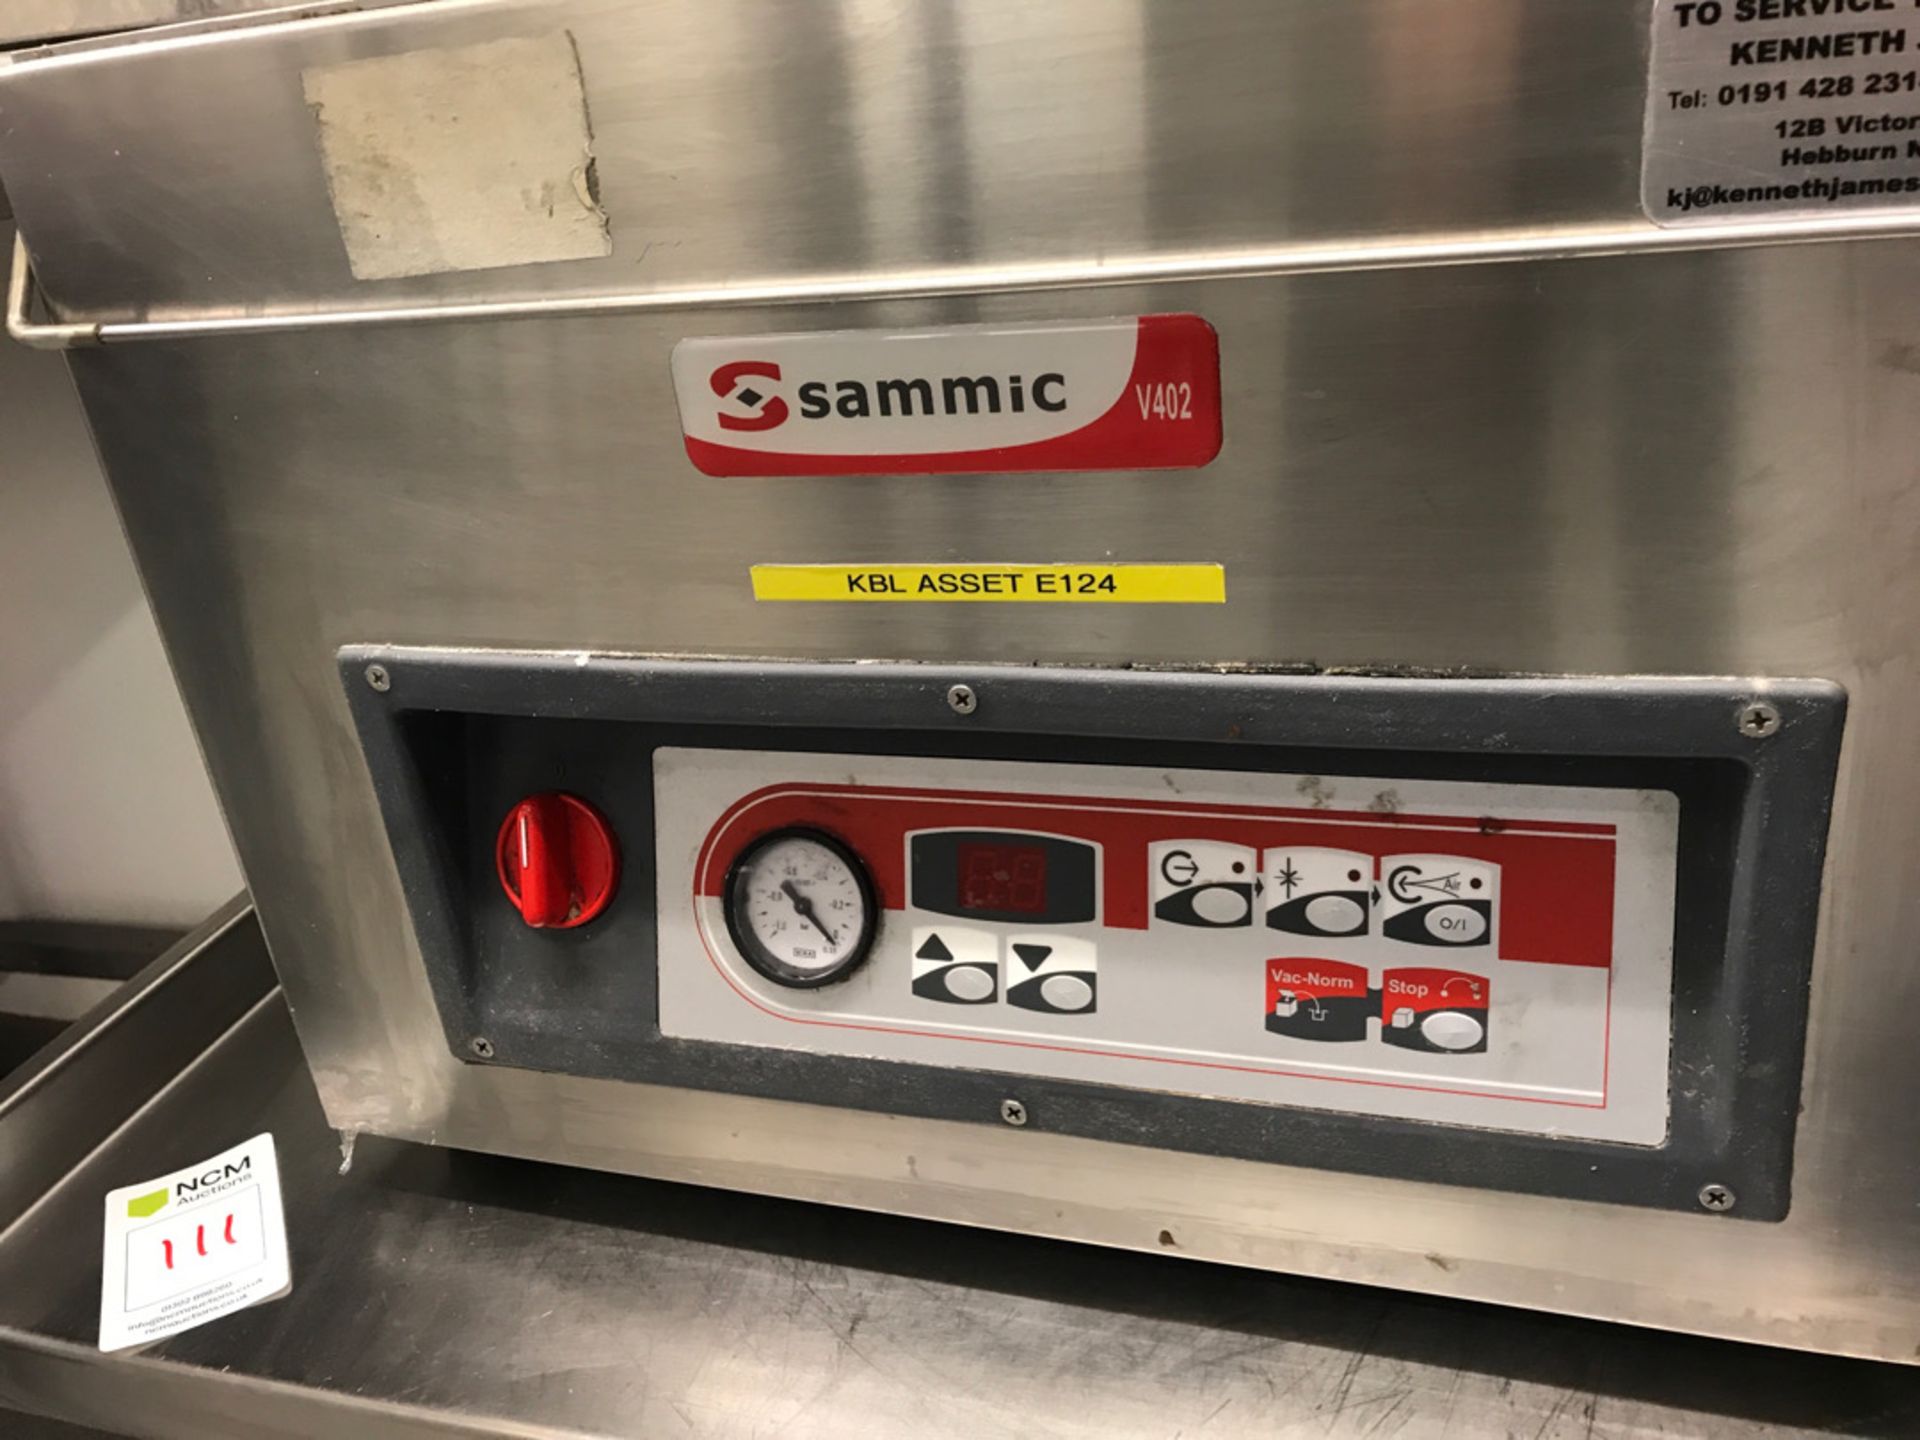 Sammic heat sealing machine - Image 2 of 3